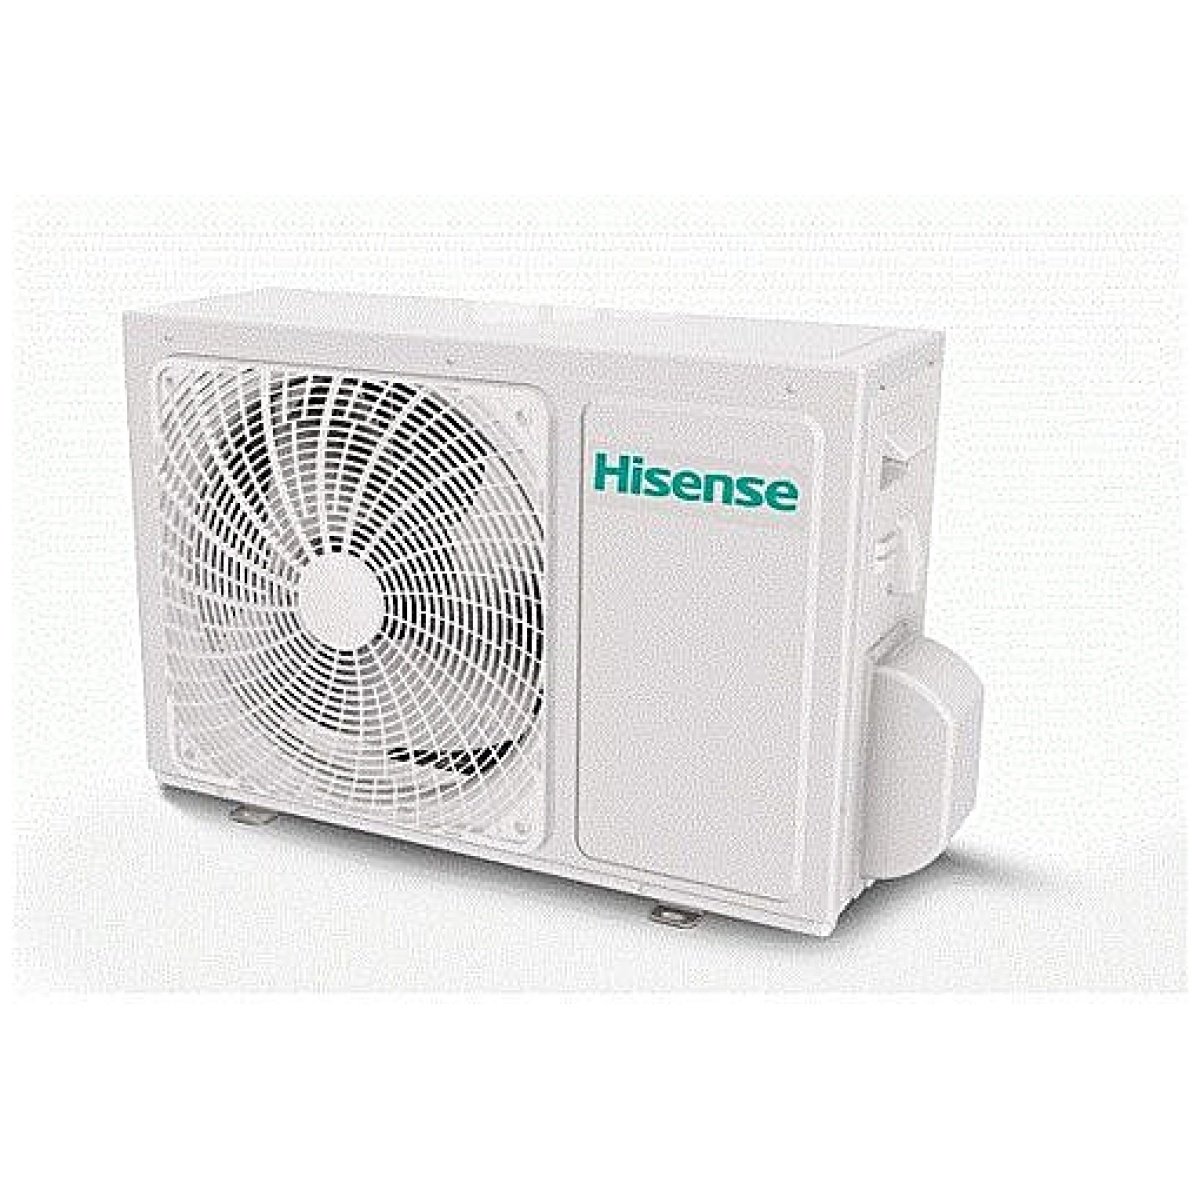 Hisense 2HP Split Copper Inverter Air Conditioner SPL 2HP INV DK